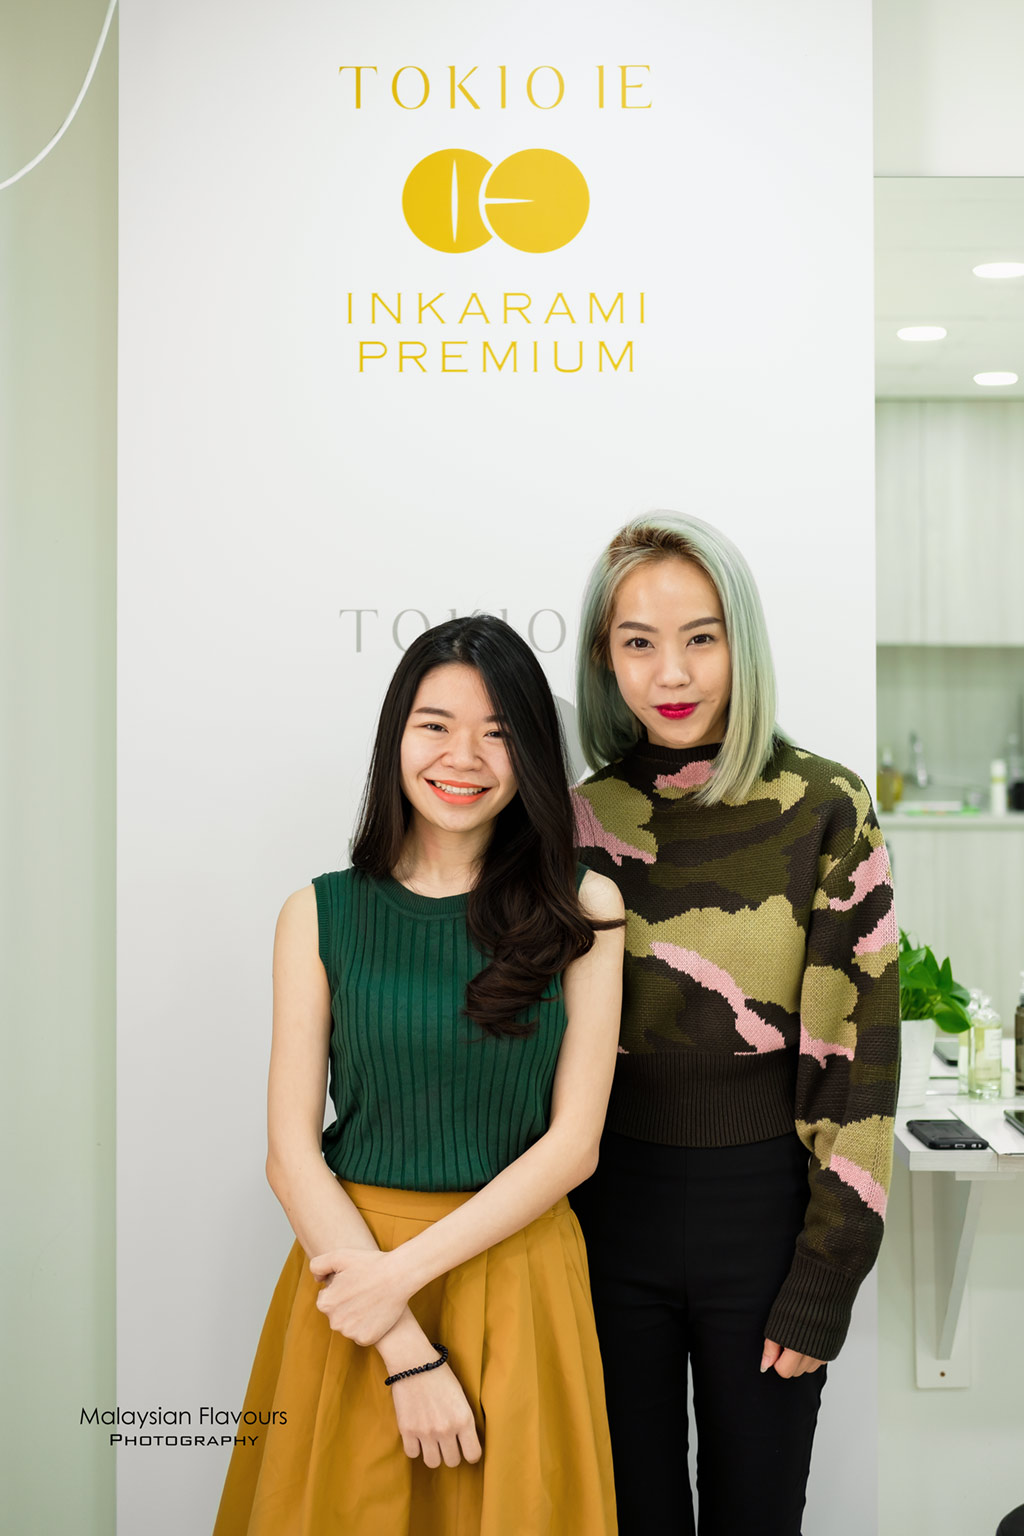 TOKIO INKARAMI Japan Hair Treatment : Salon Hair Care at Home Every Day |  Malaysian Flavours